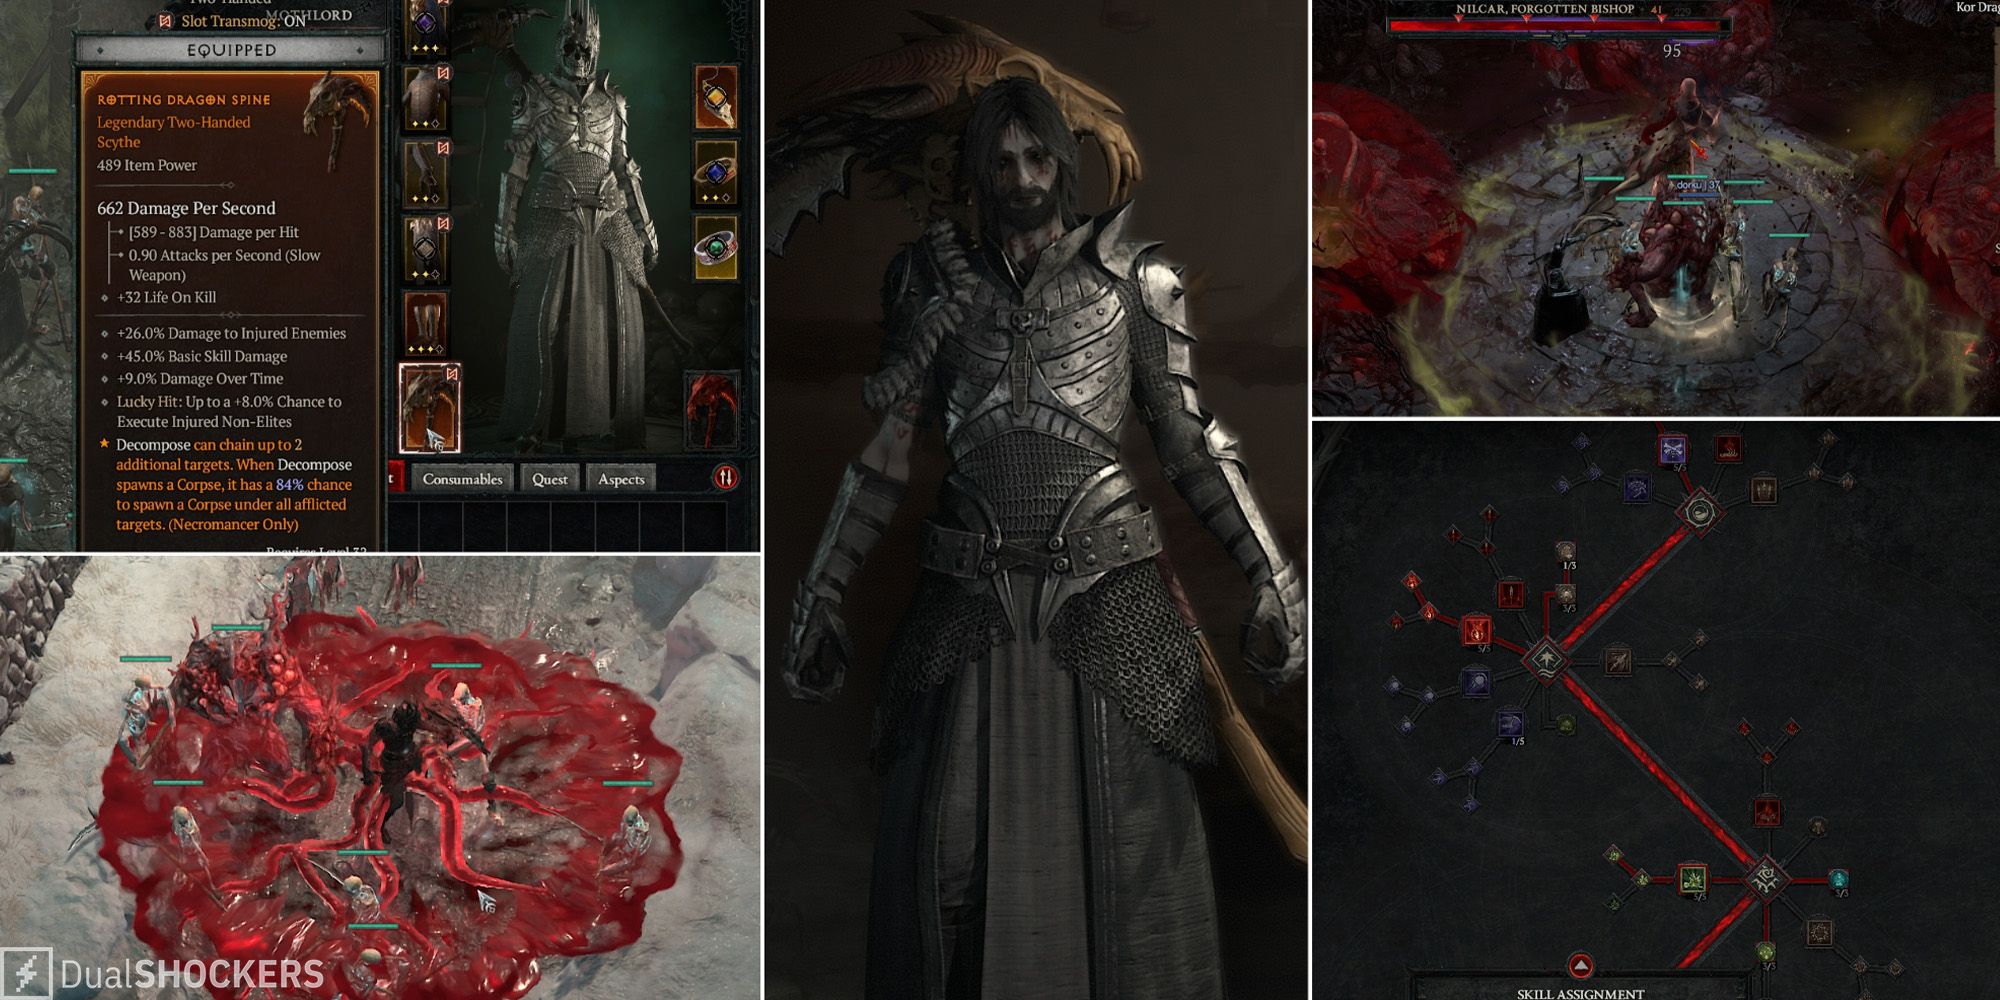 Diablo 4 Necromancer Leveling Guide